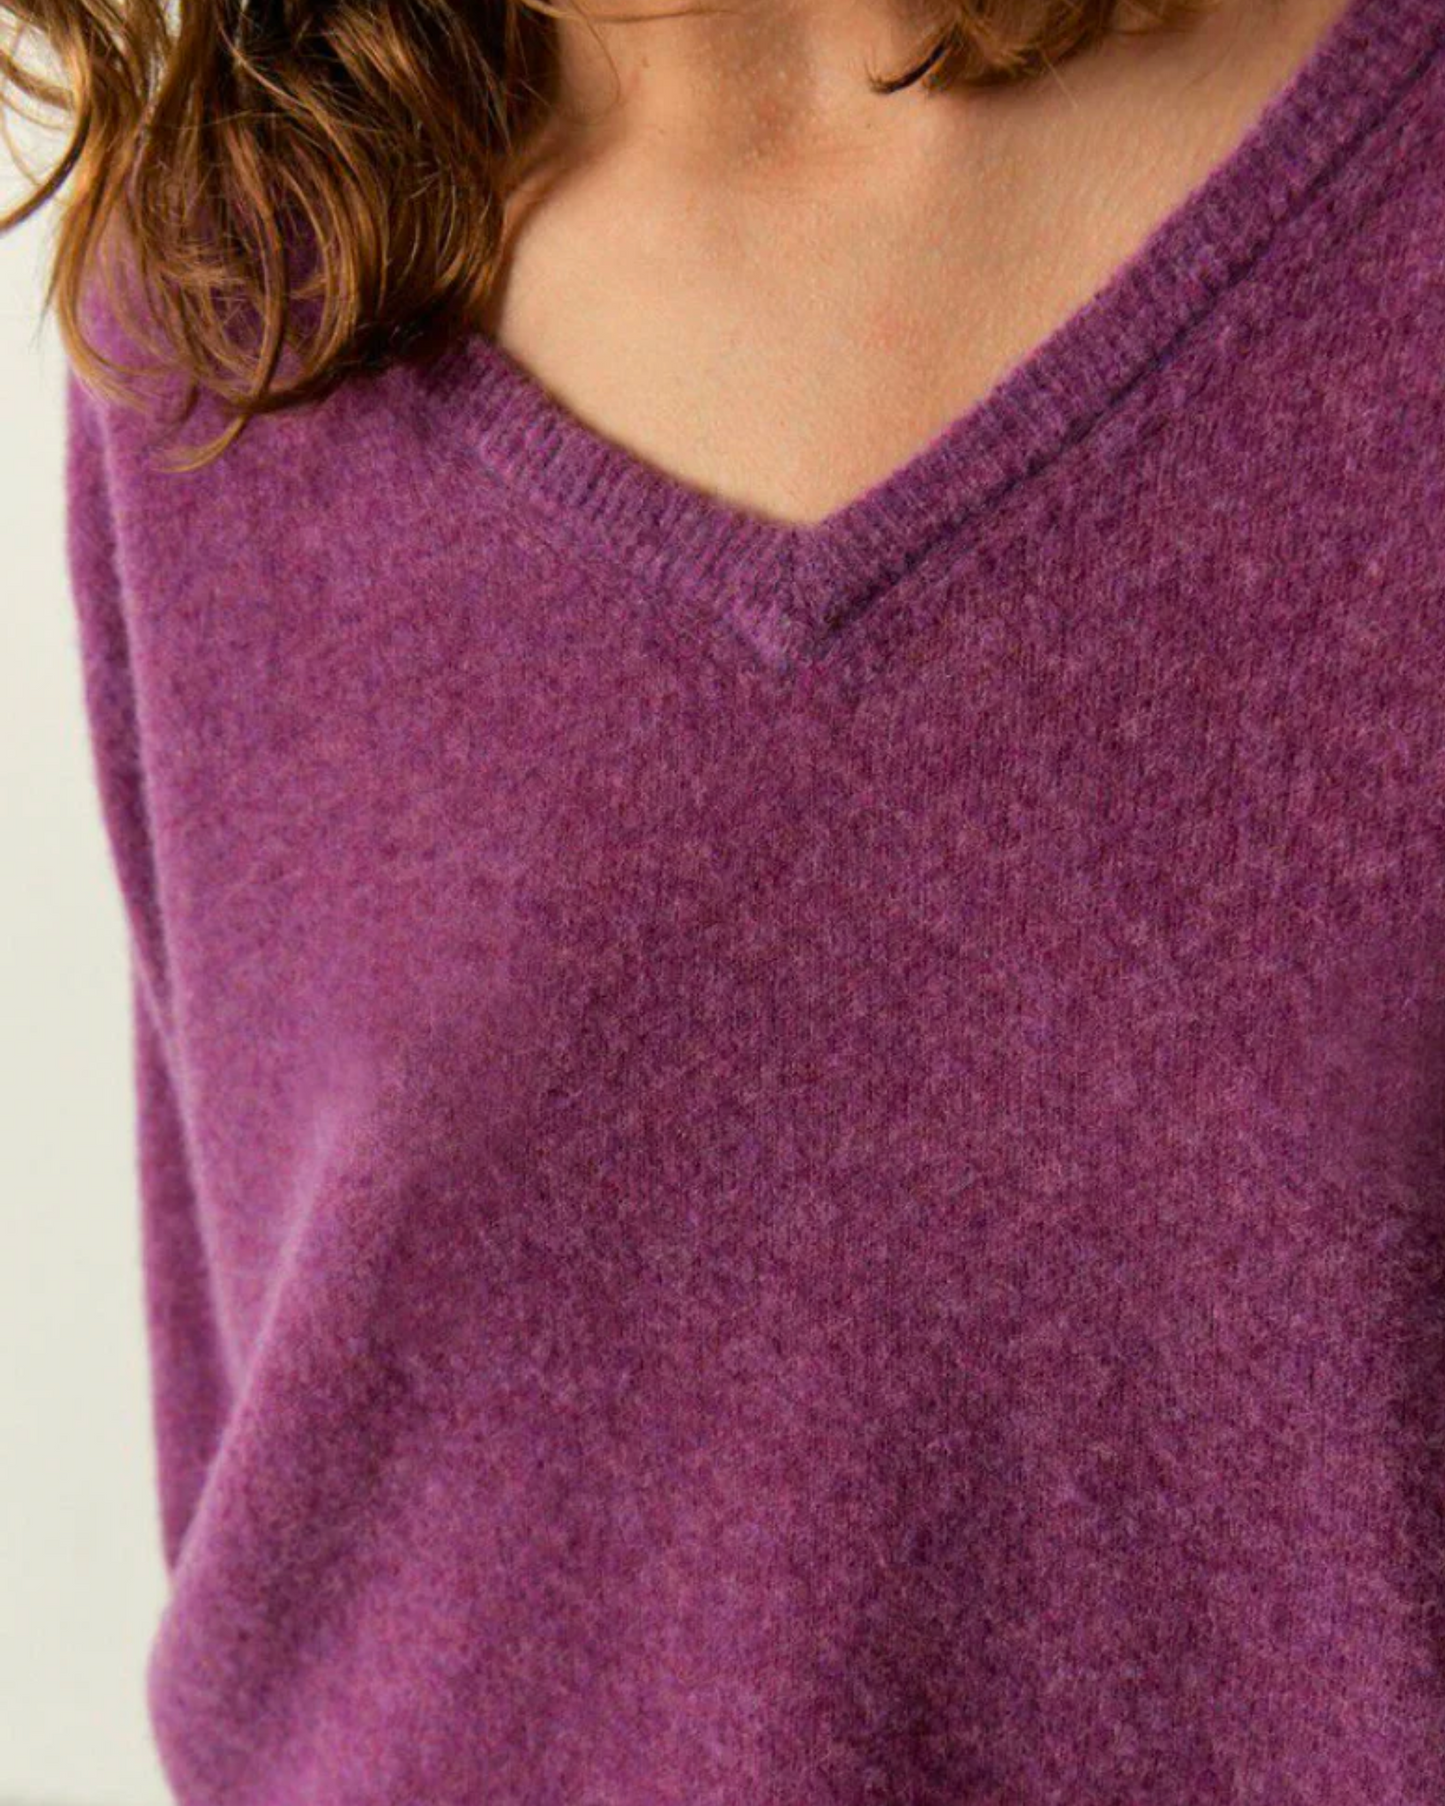 American Vintage Sweater Violet